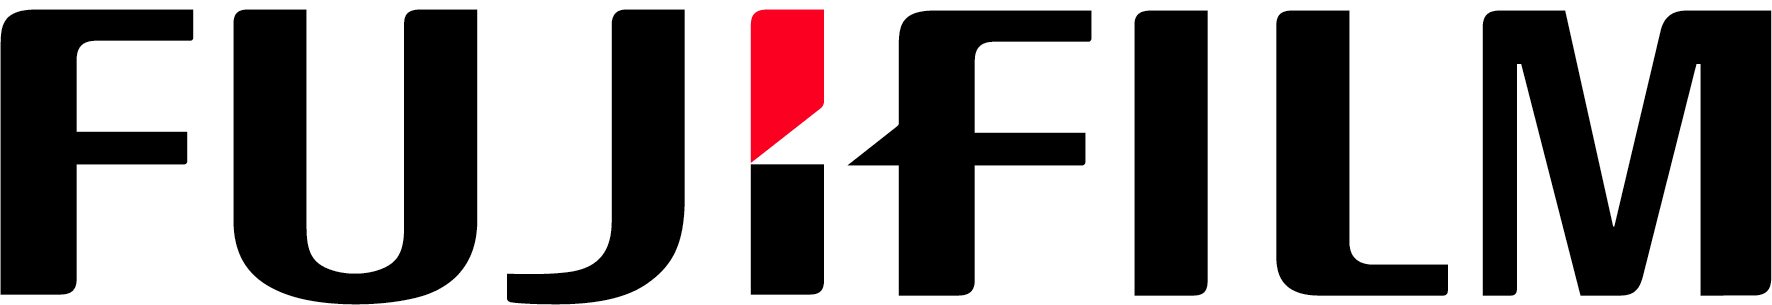 Fujifilm Fuji Lto Ultrium 7 With Case QTY 2 Units